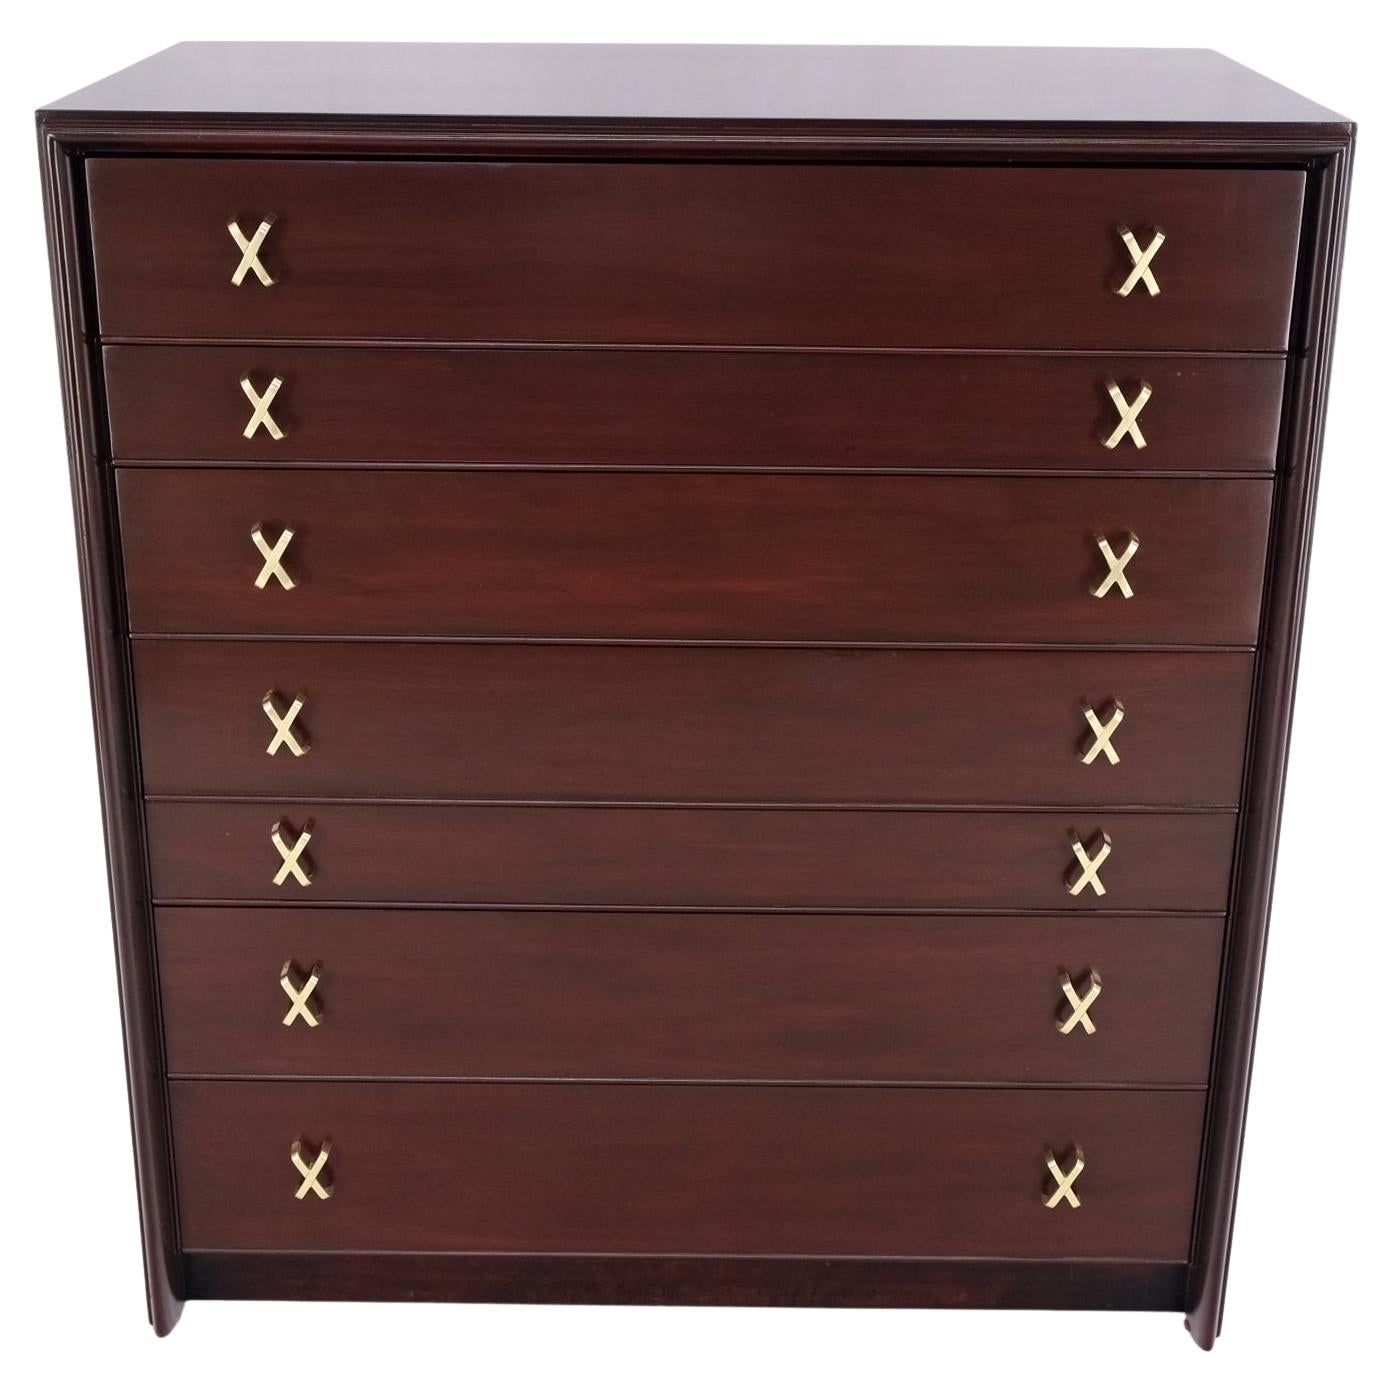 Paul Frankl for Johnson Brass X Pulls High Chest of Drawers Dresser Cabinet